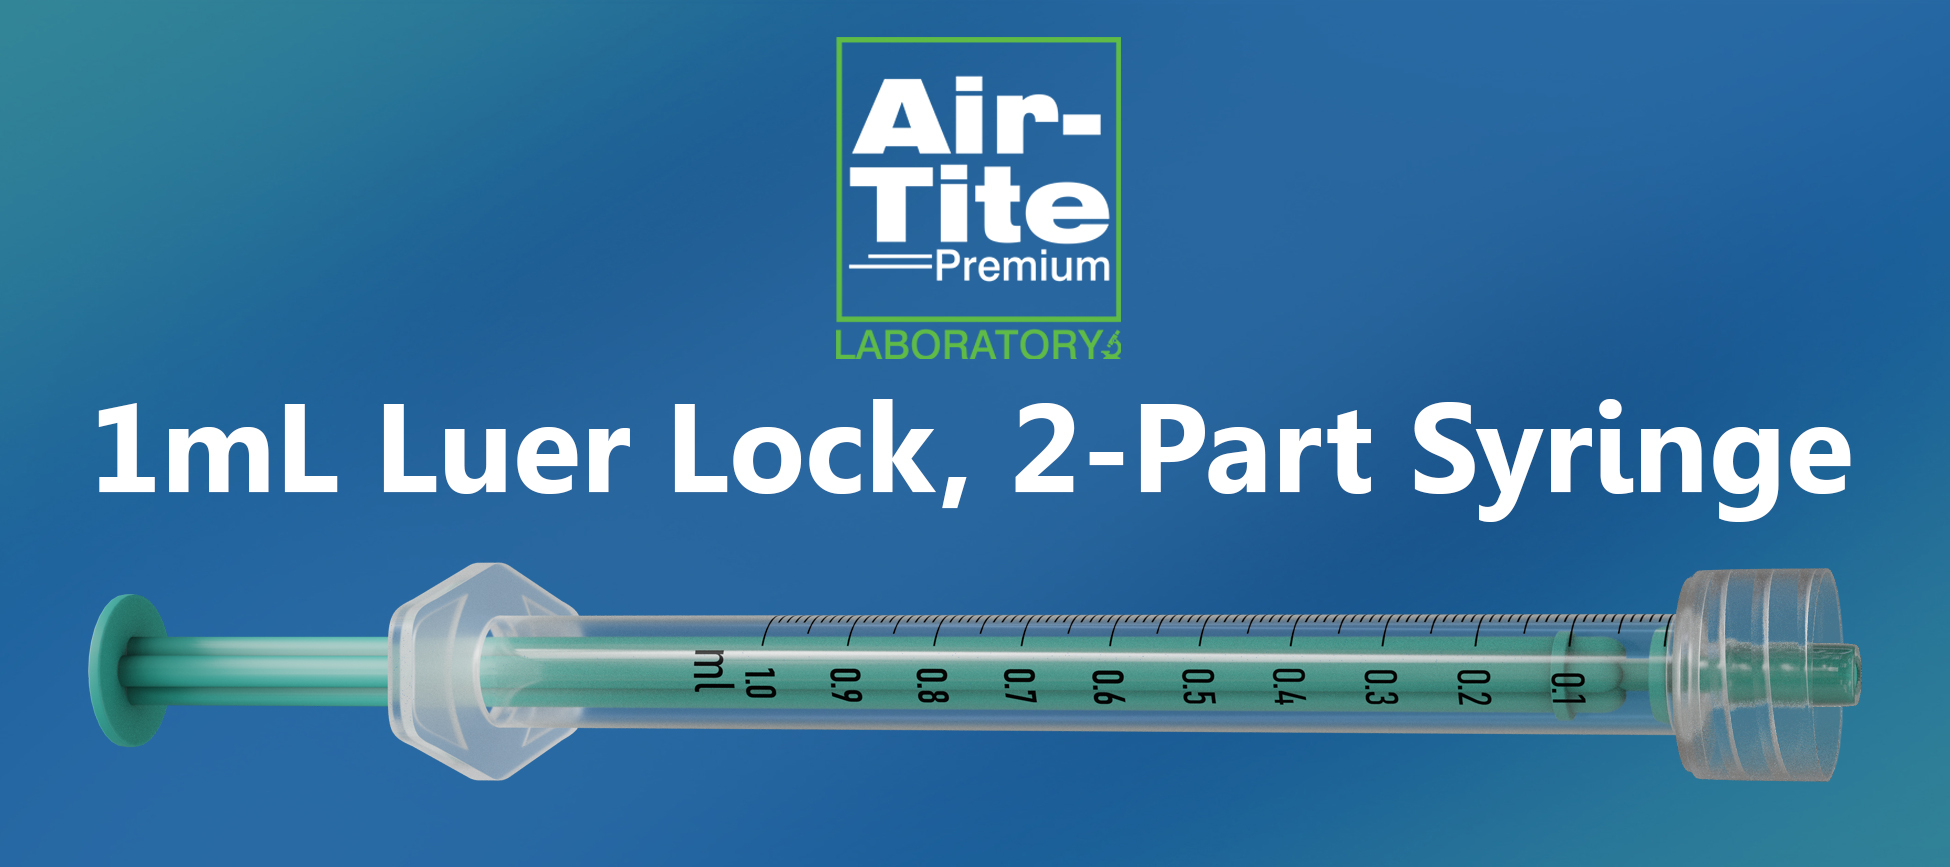 Air-Tite Introduces New 1mL Luer Lock 2-Part Syringe - Air-Tite